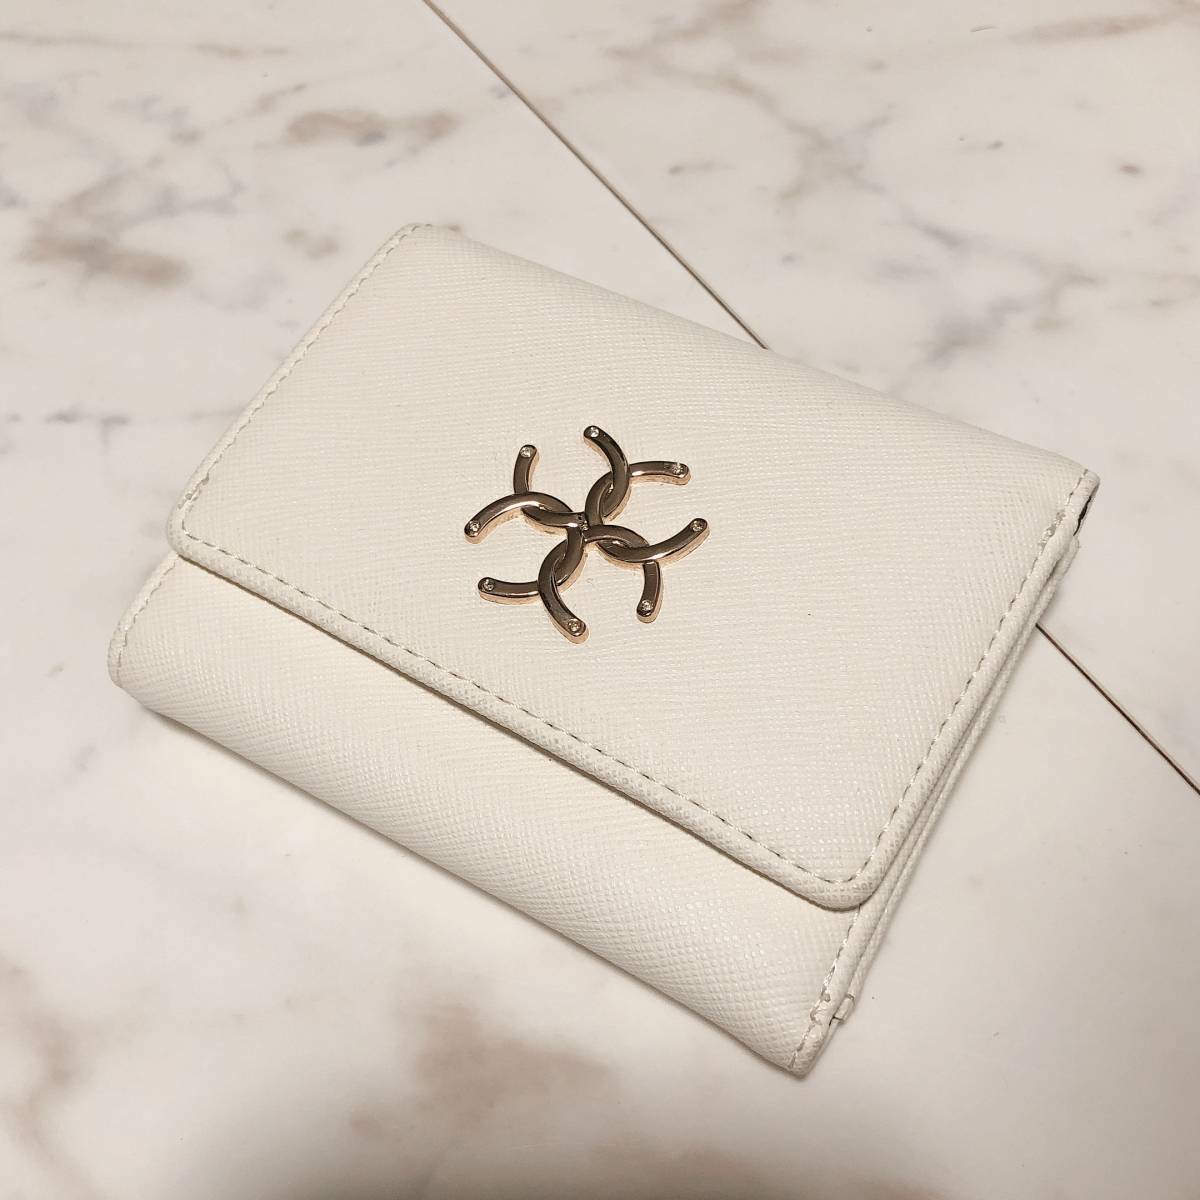  free shipping why folding twice purse wallet white harness monogram regular price 1 ten thousand jpy super 